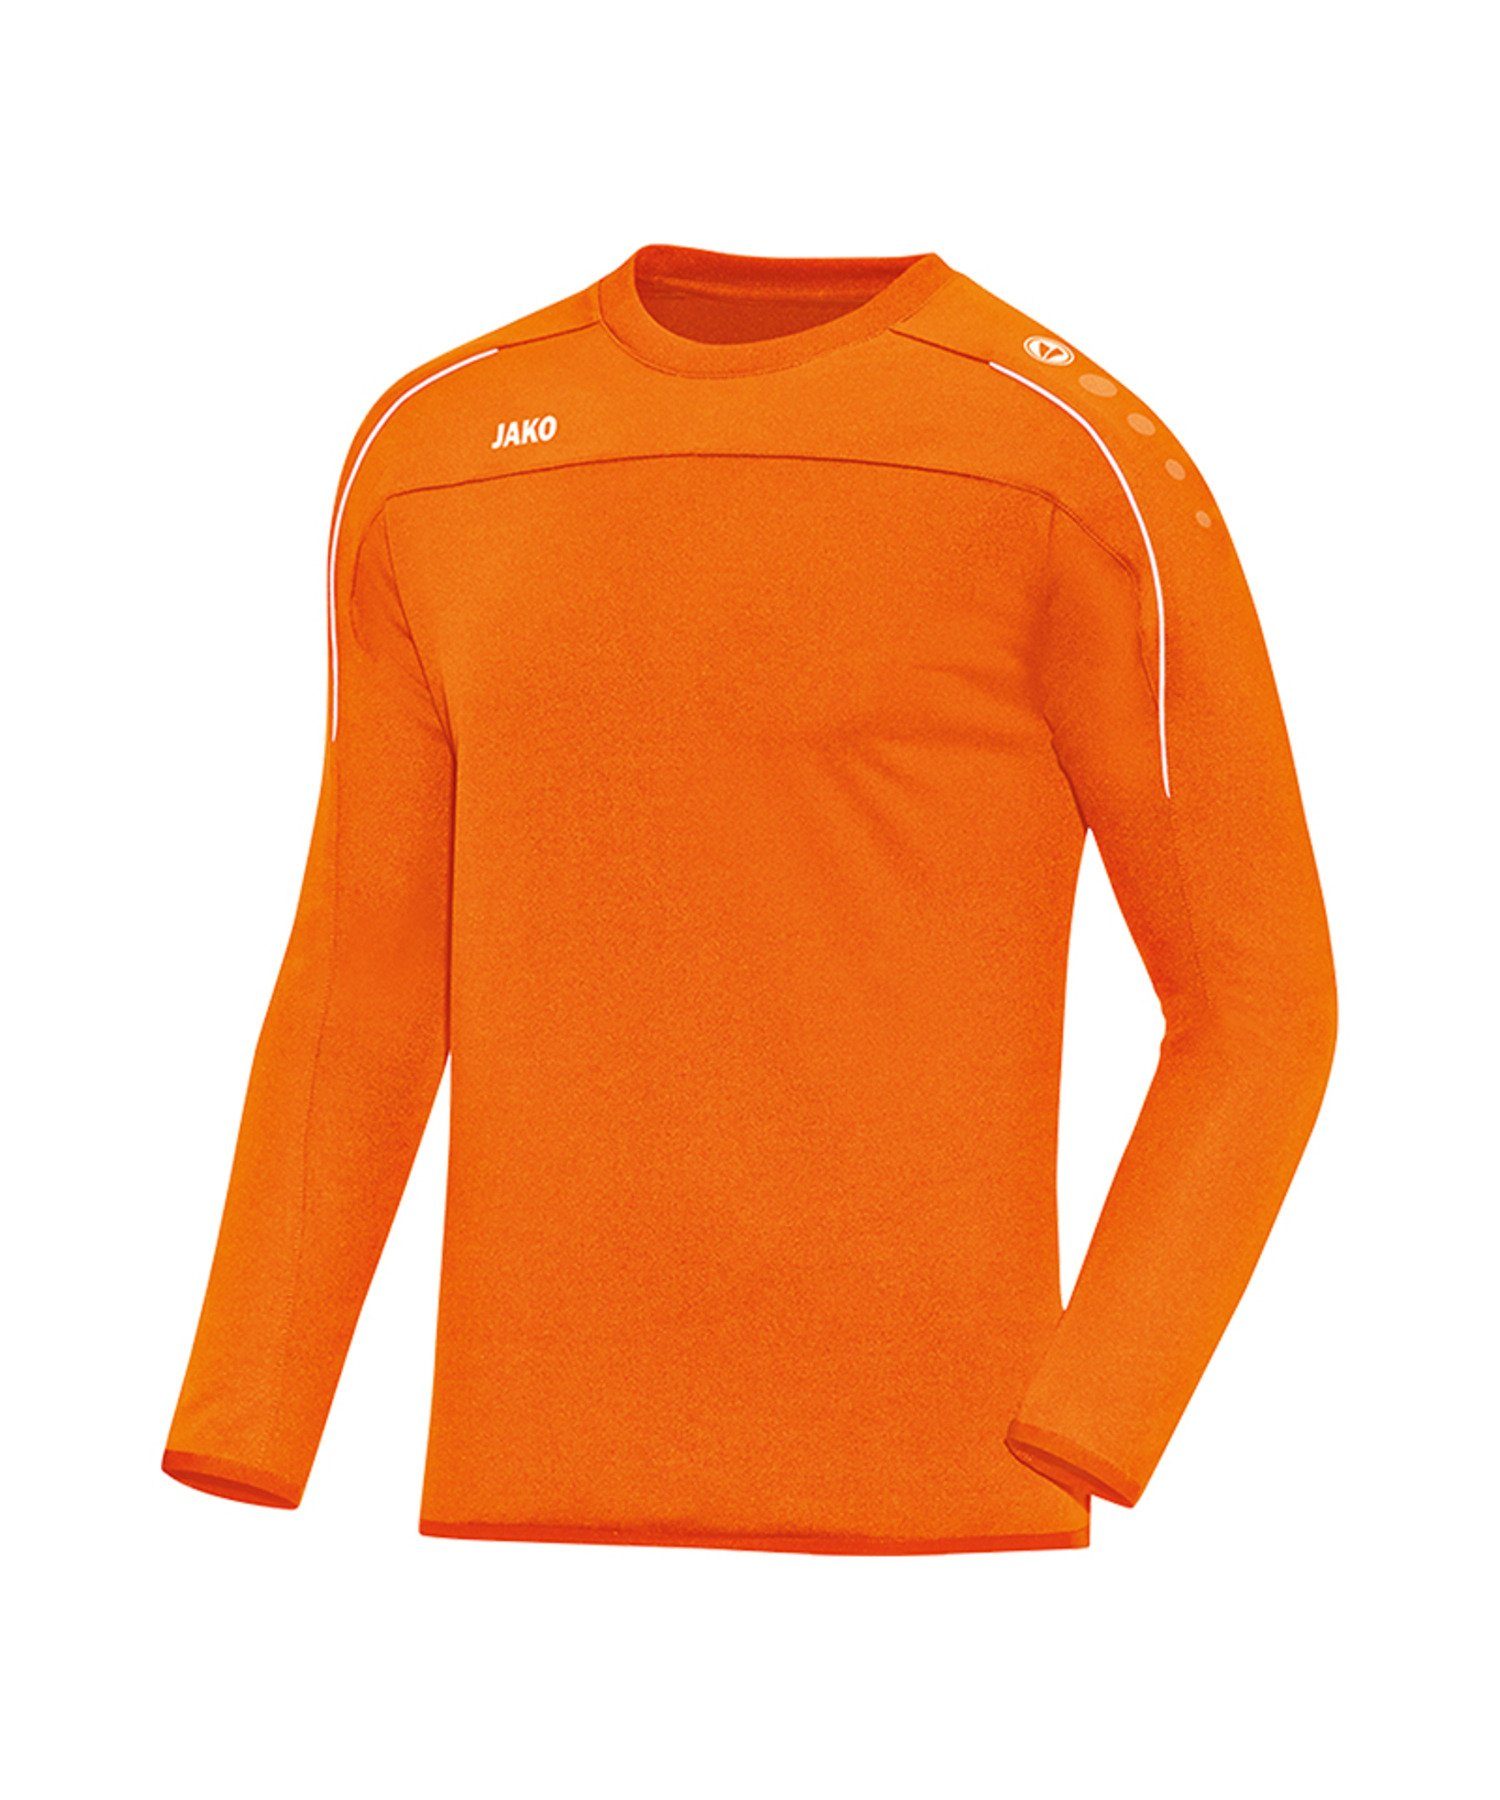 Jako Sweatshirt Classico Sweatshirt Orange